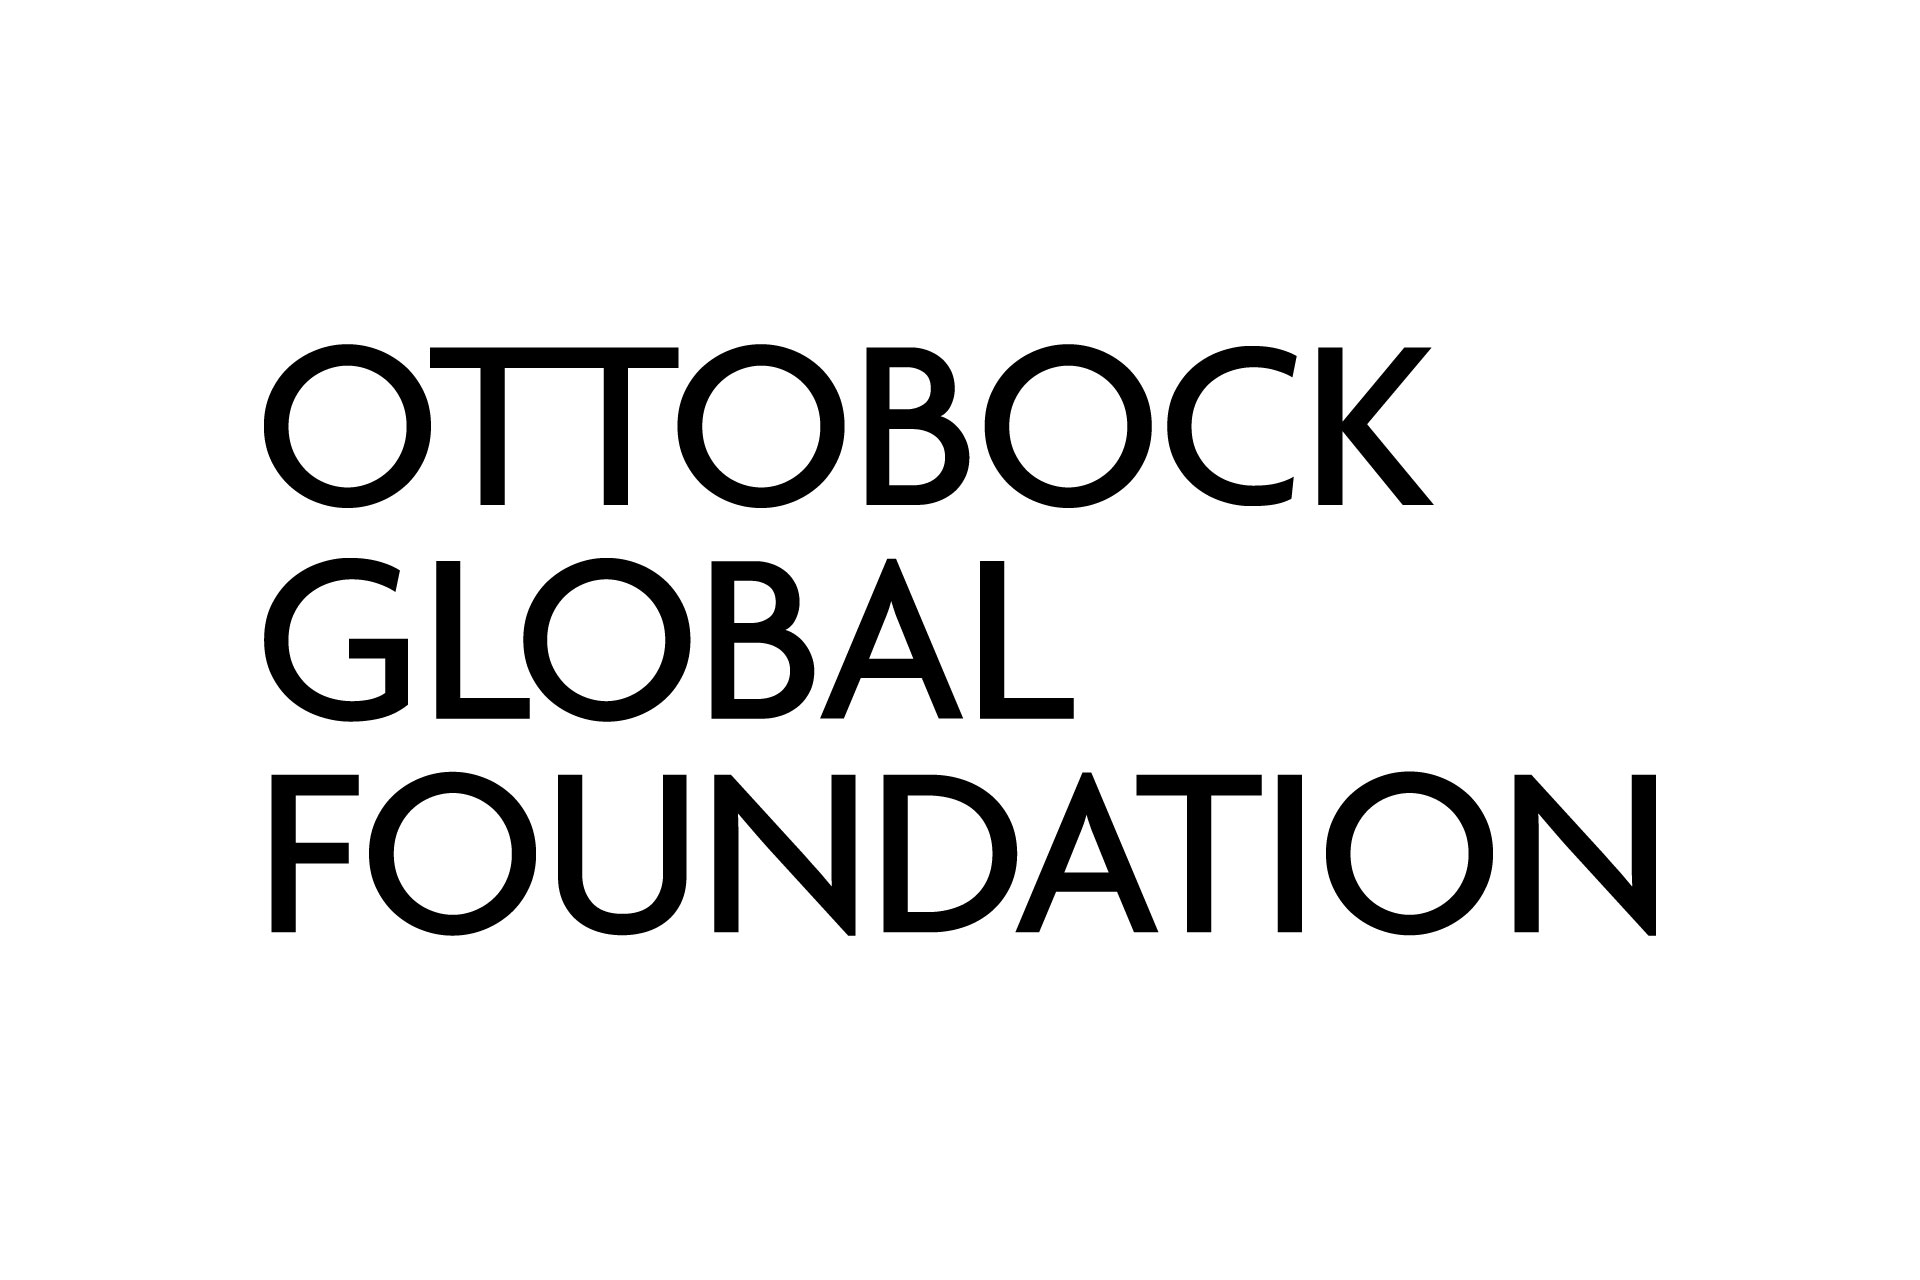 (c) Ottobock-global-foundation.com